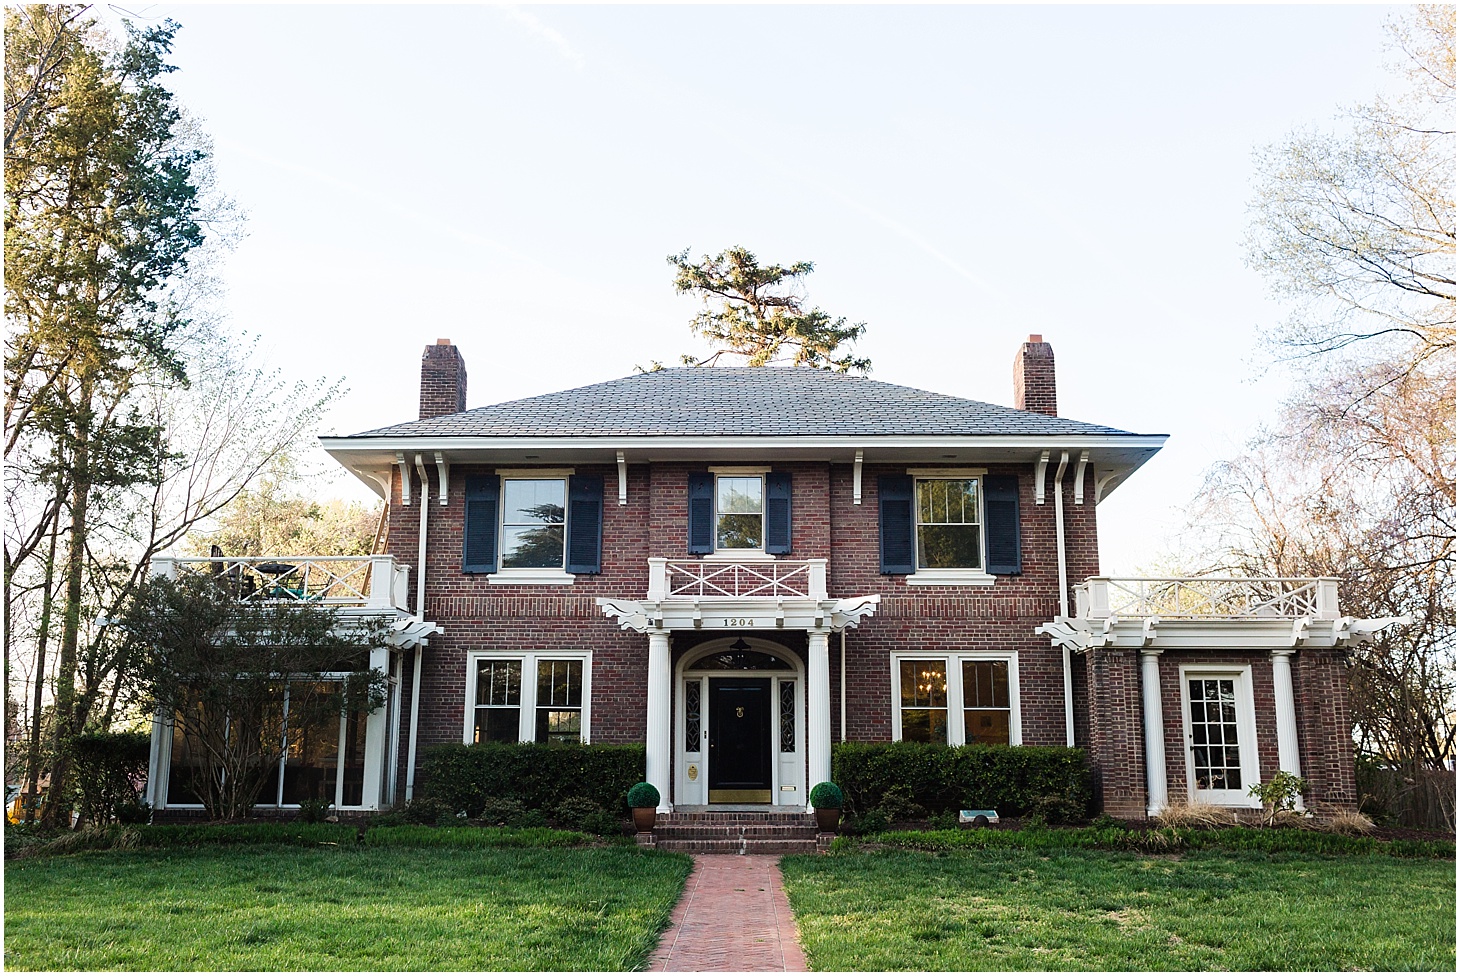 Brick Colonial Revival Home Tour | Richmond, VA | Sarah Bradshaw Photography